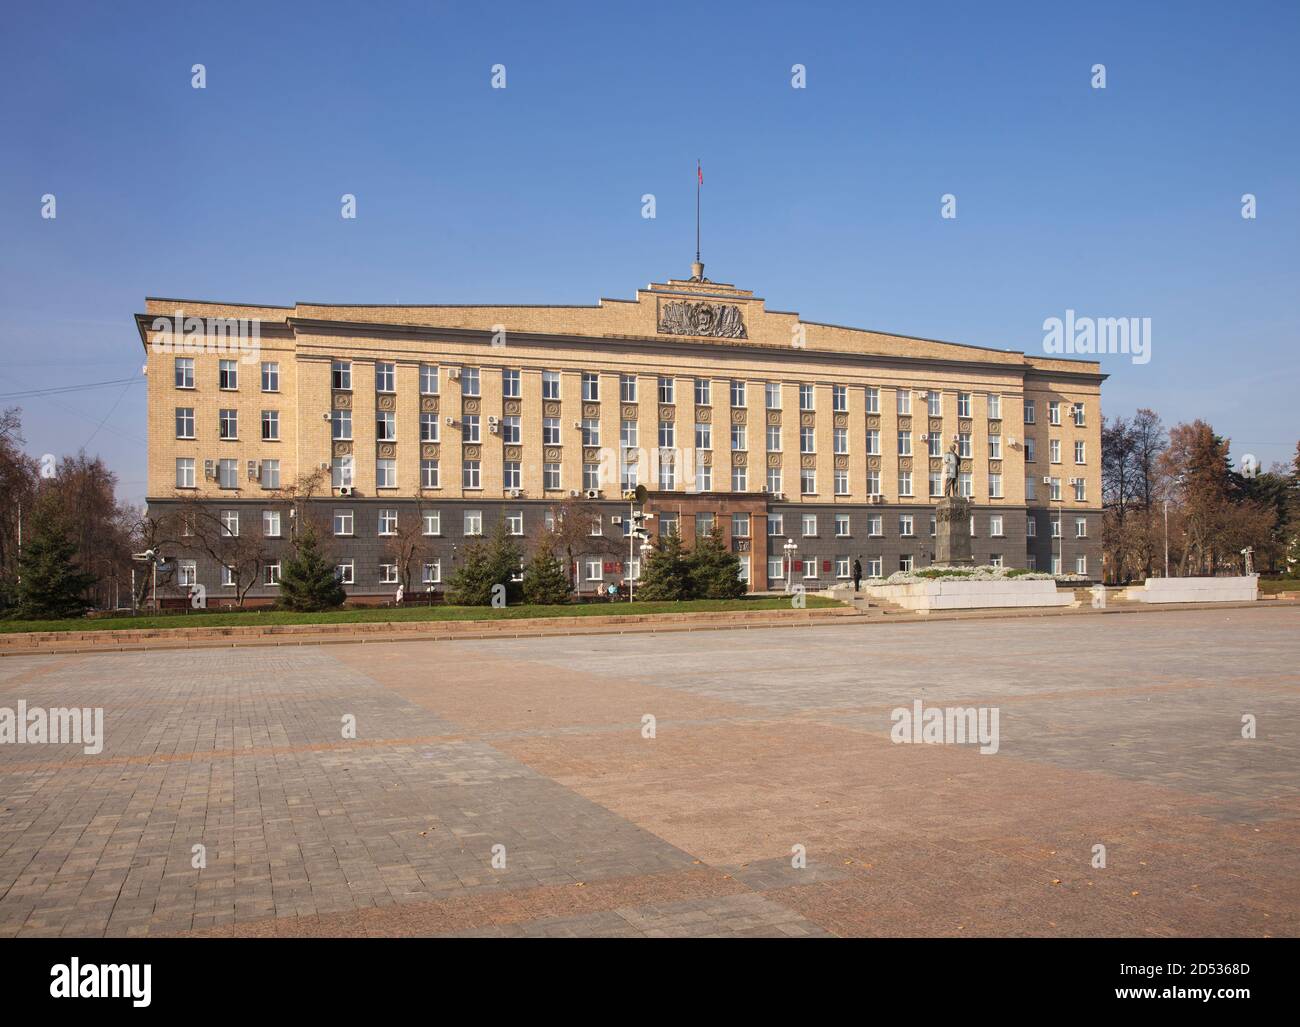 Oryol state - Oblast - flag, Russia Stock Photo - Alamy